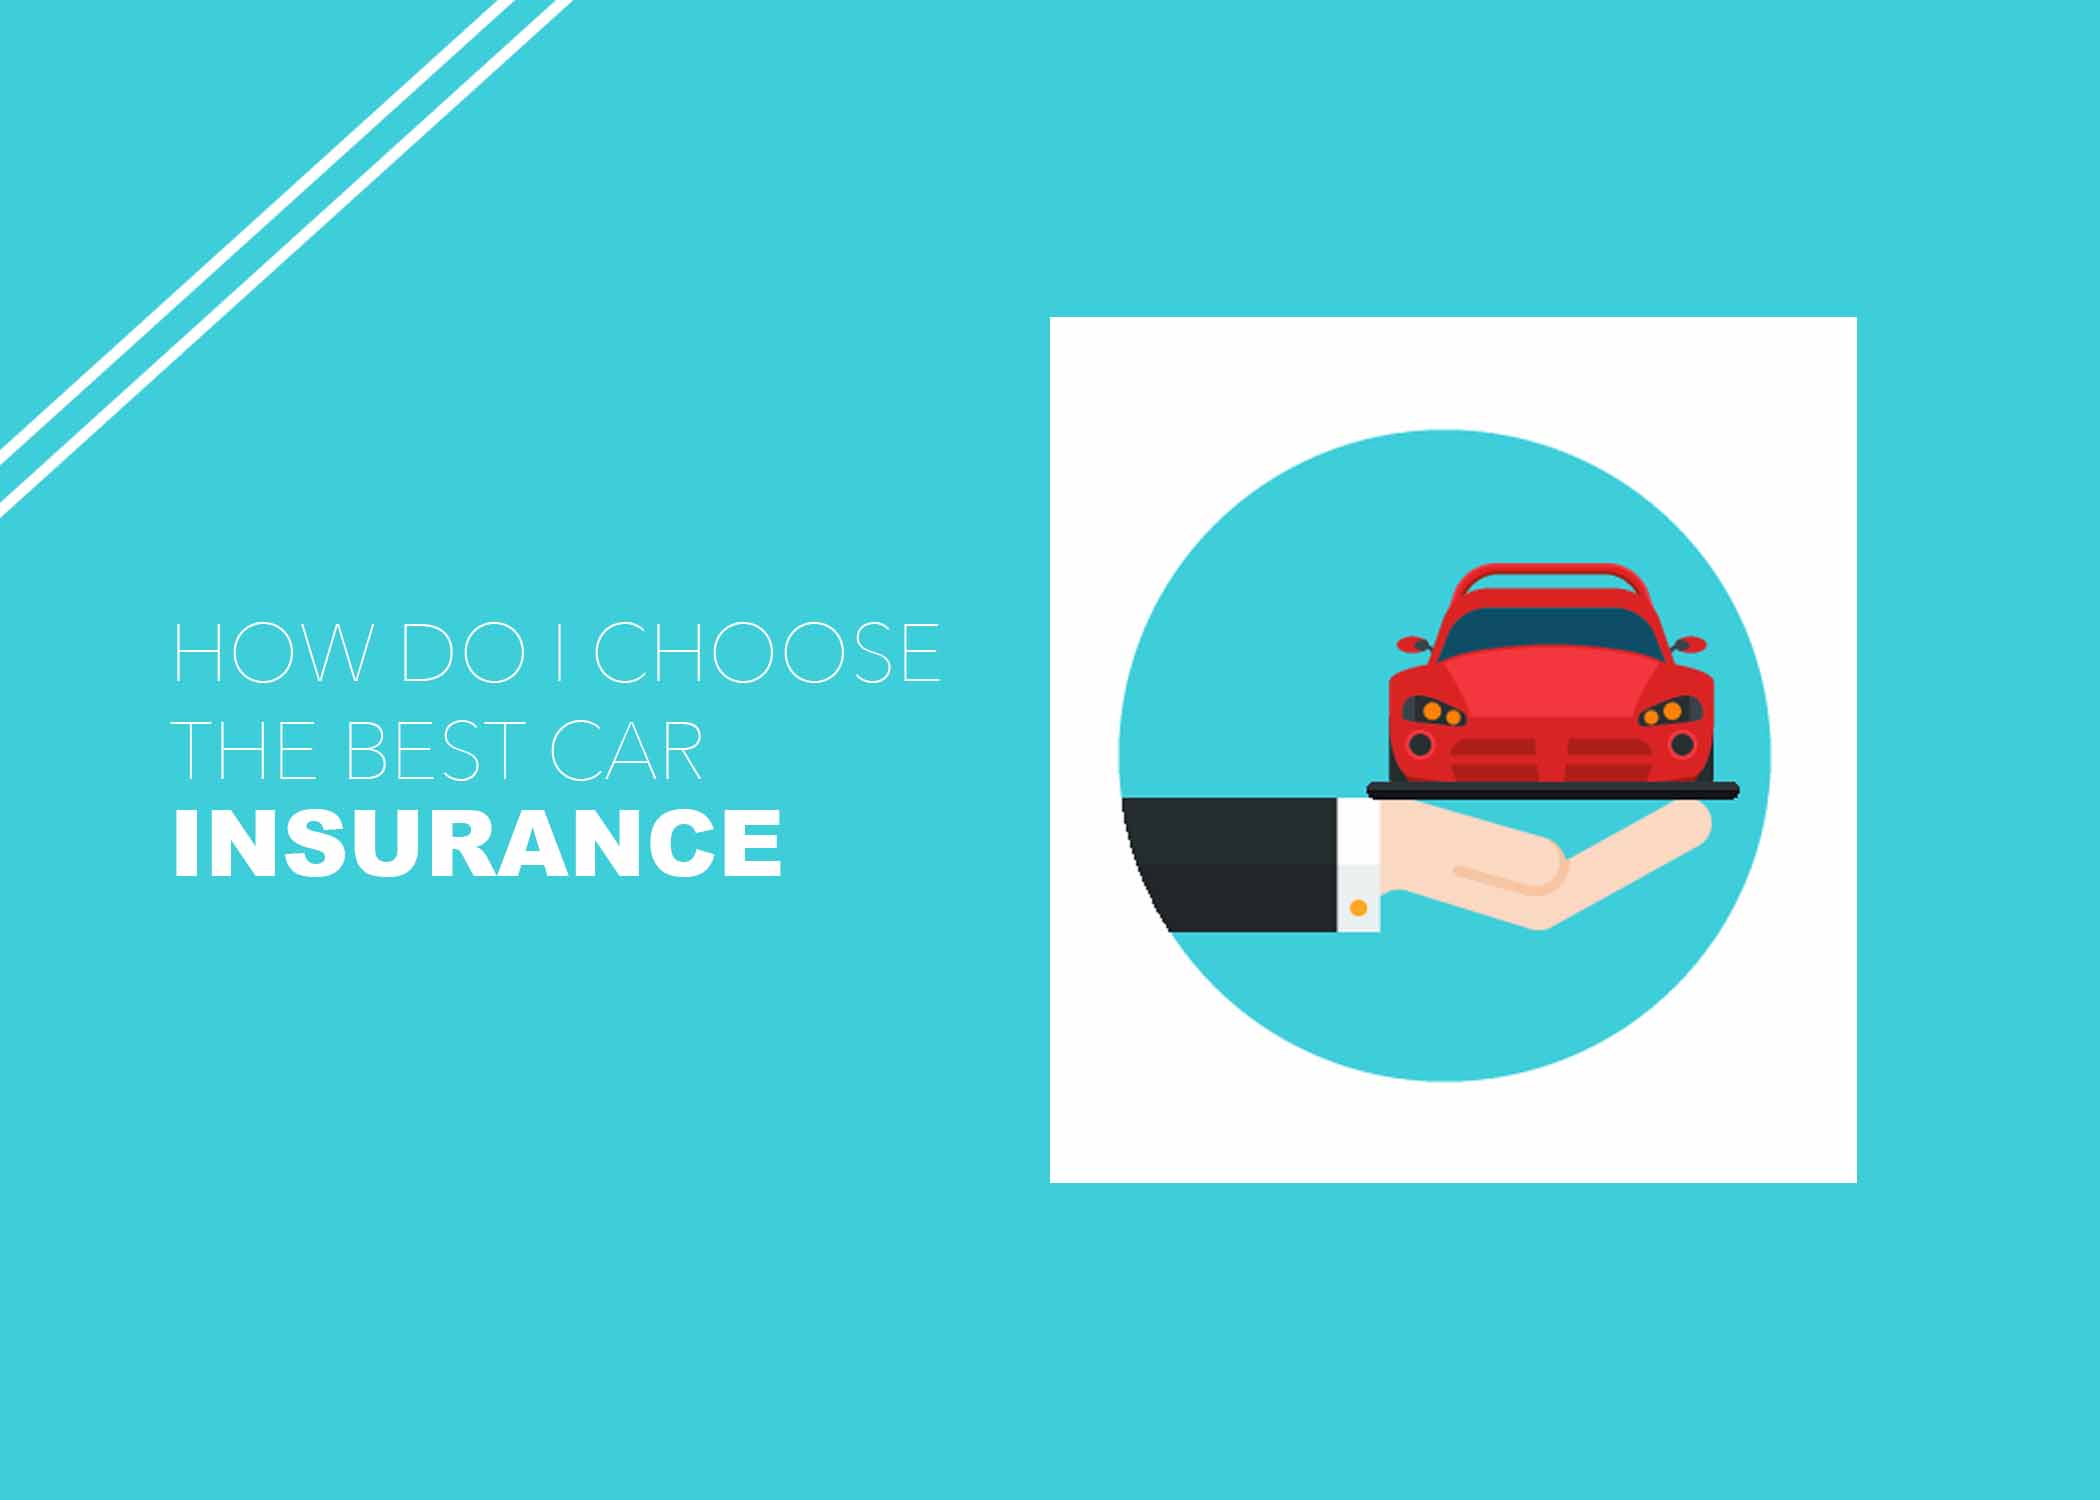 How do I Choose the Best Car Insurance?